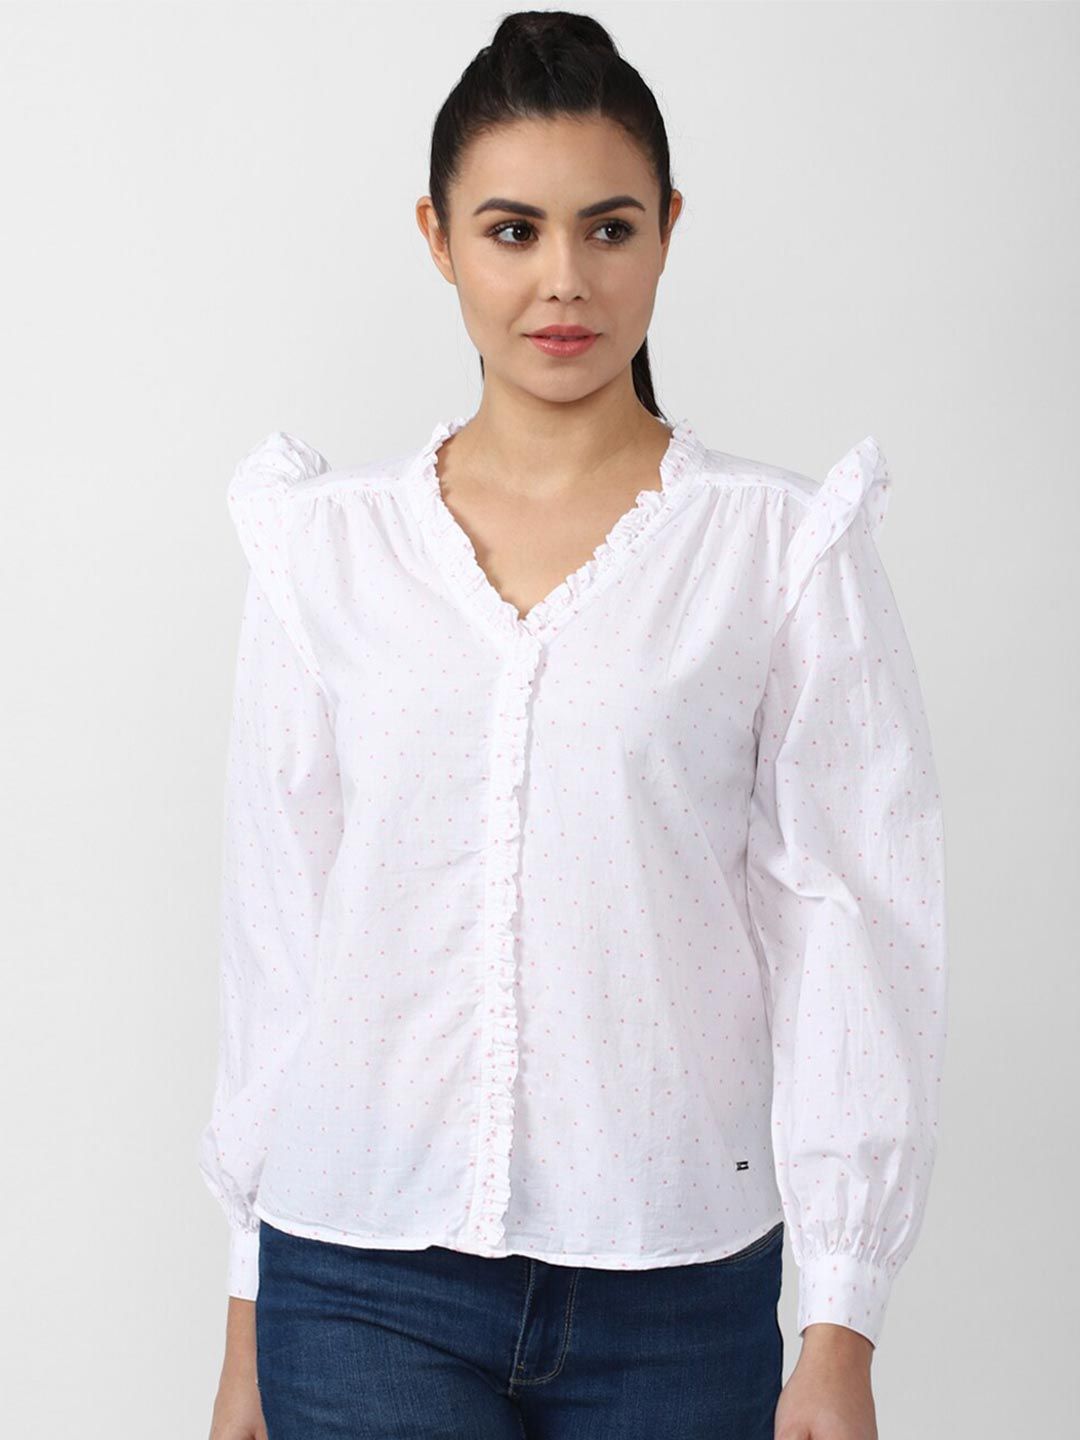 Van Heusen Woman White Printed Shirt Style Top Price in India